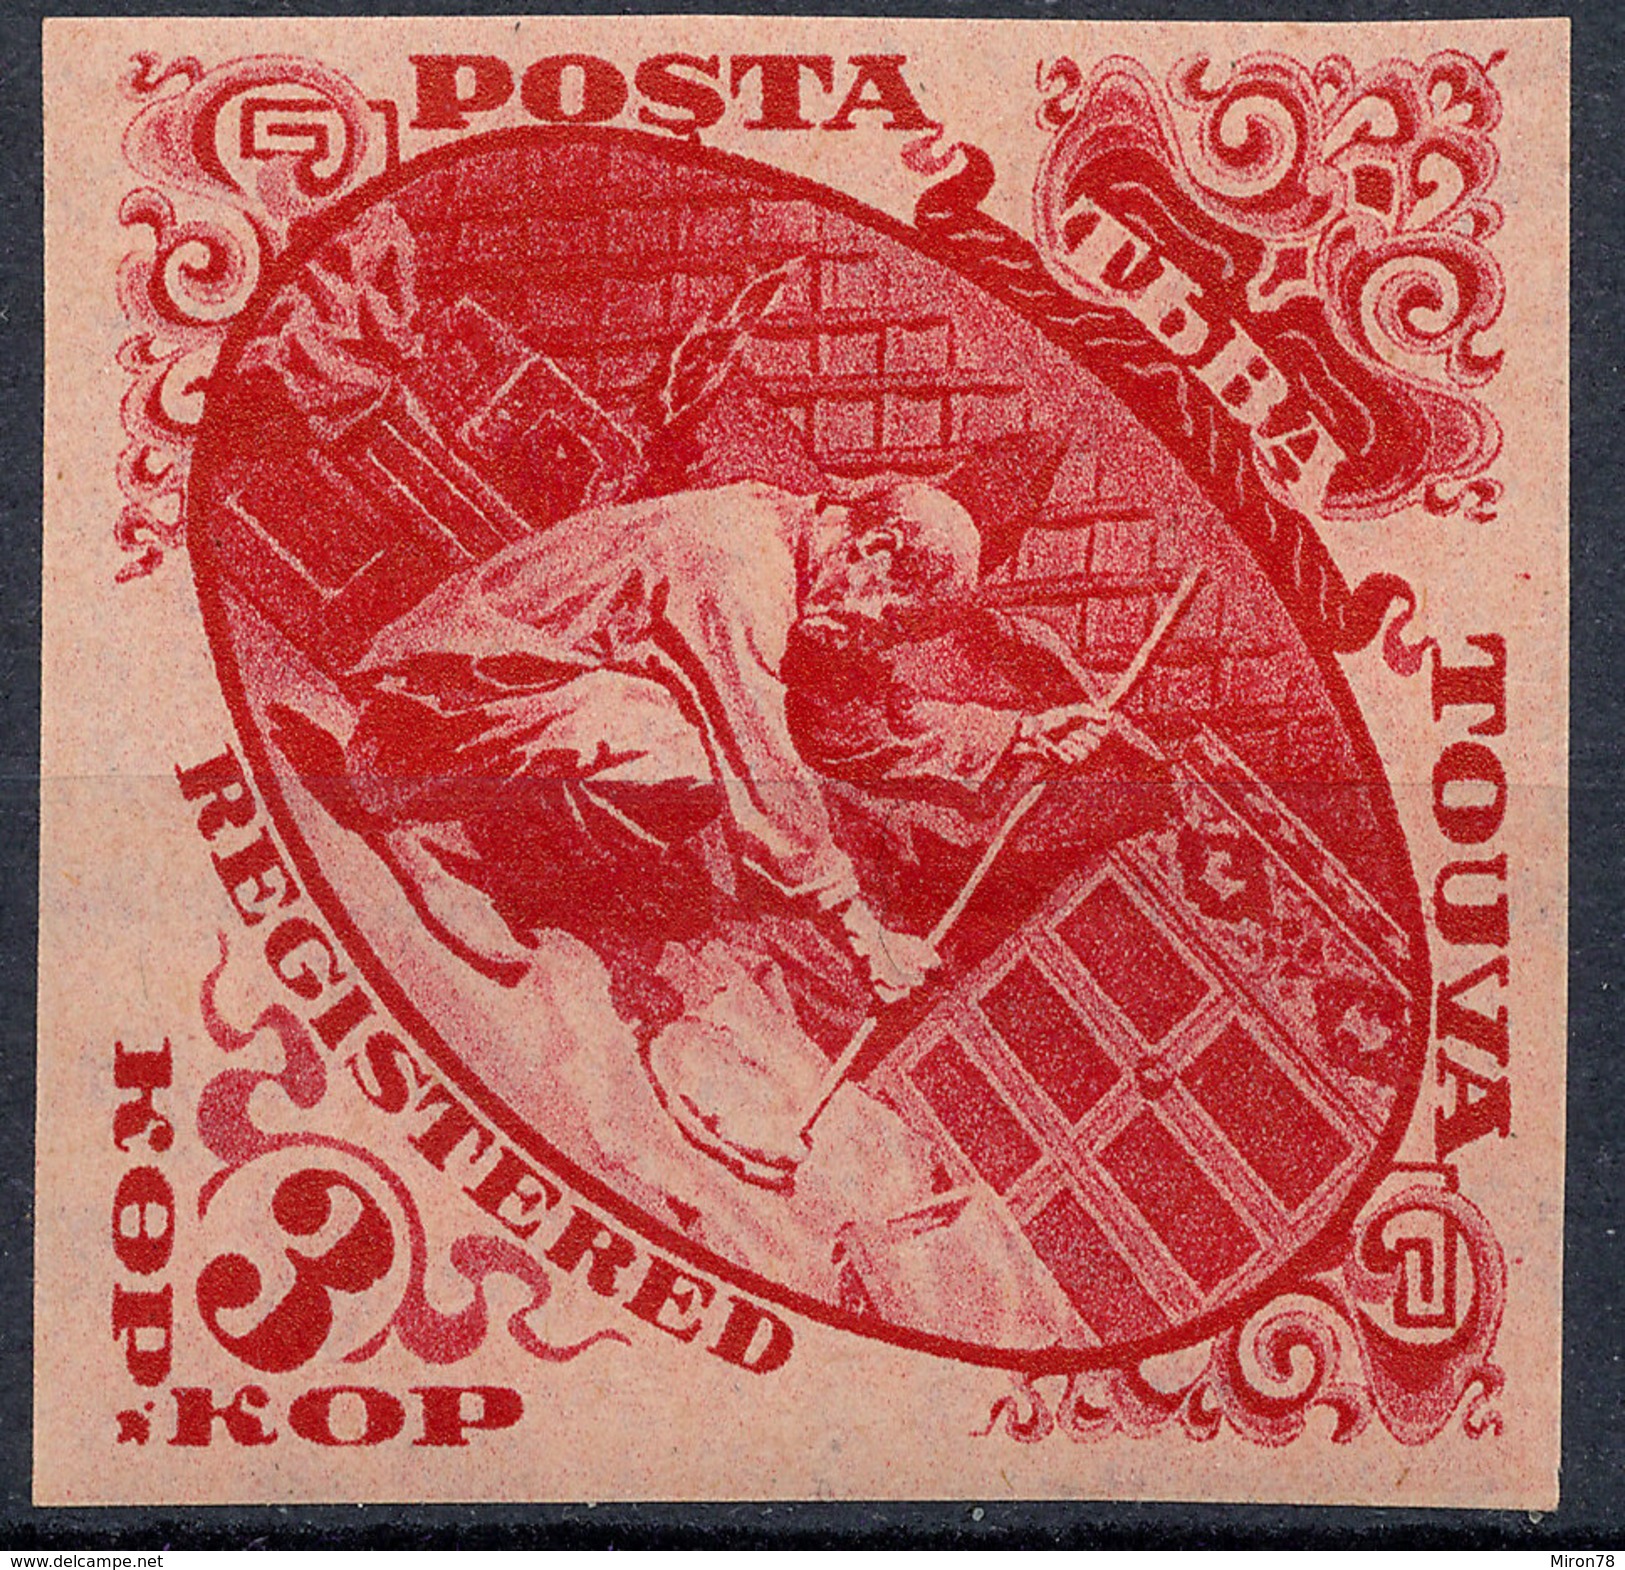 Stamp Tannu Tuva 1934 Mint Imperf  Lot#138 - Touva